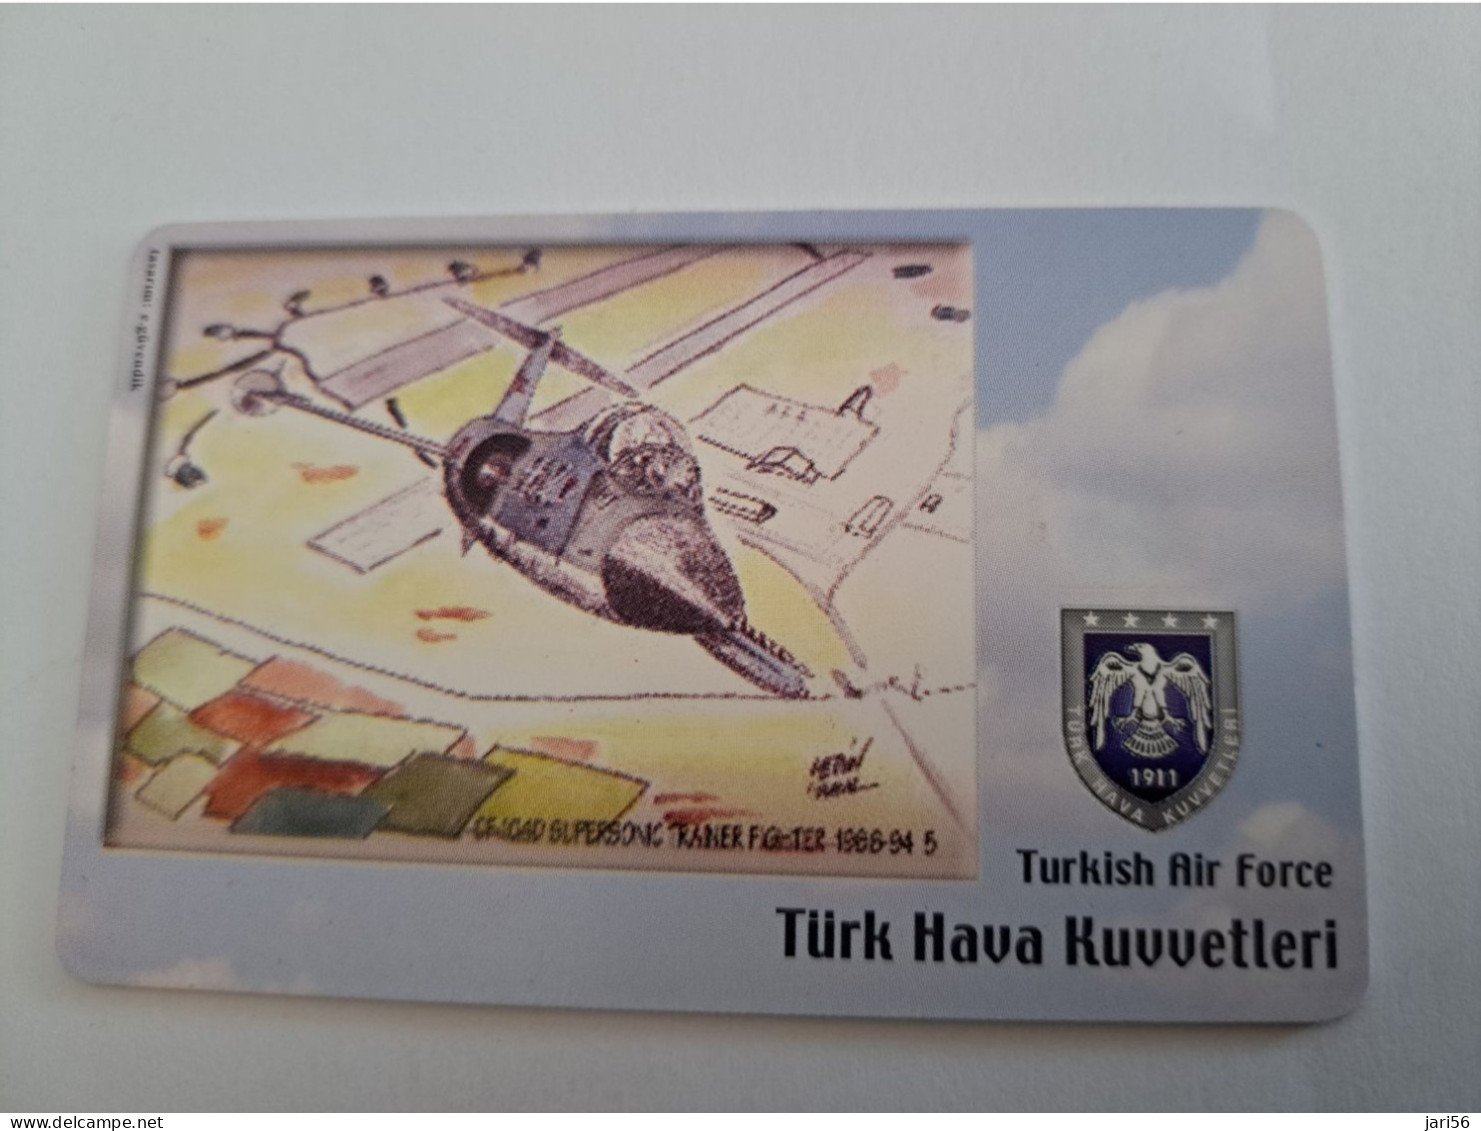 TURKIJE / 50 UNITS/ CHIPCARD/ TURKISH AIR FORCE  / DIFFERENT PLANES /        Fine Used Card  **15410** - Türkei